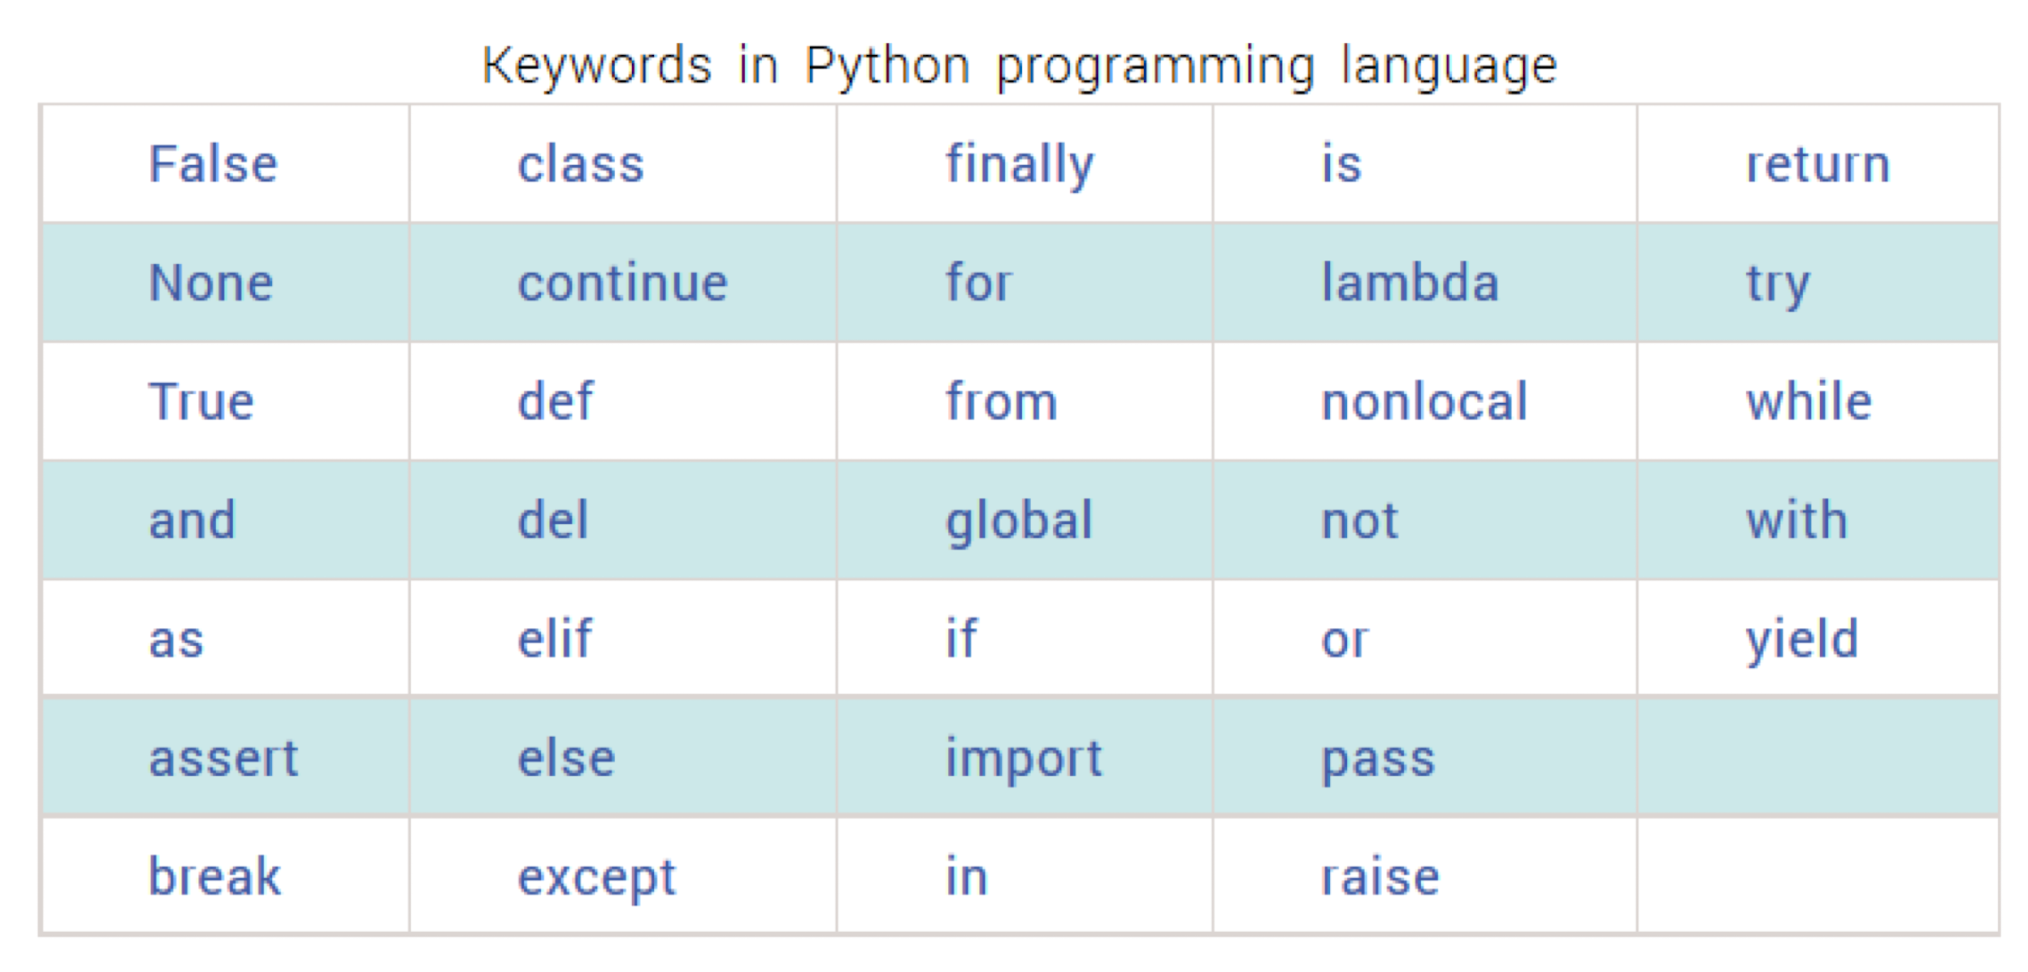 Python’s keywords